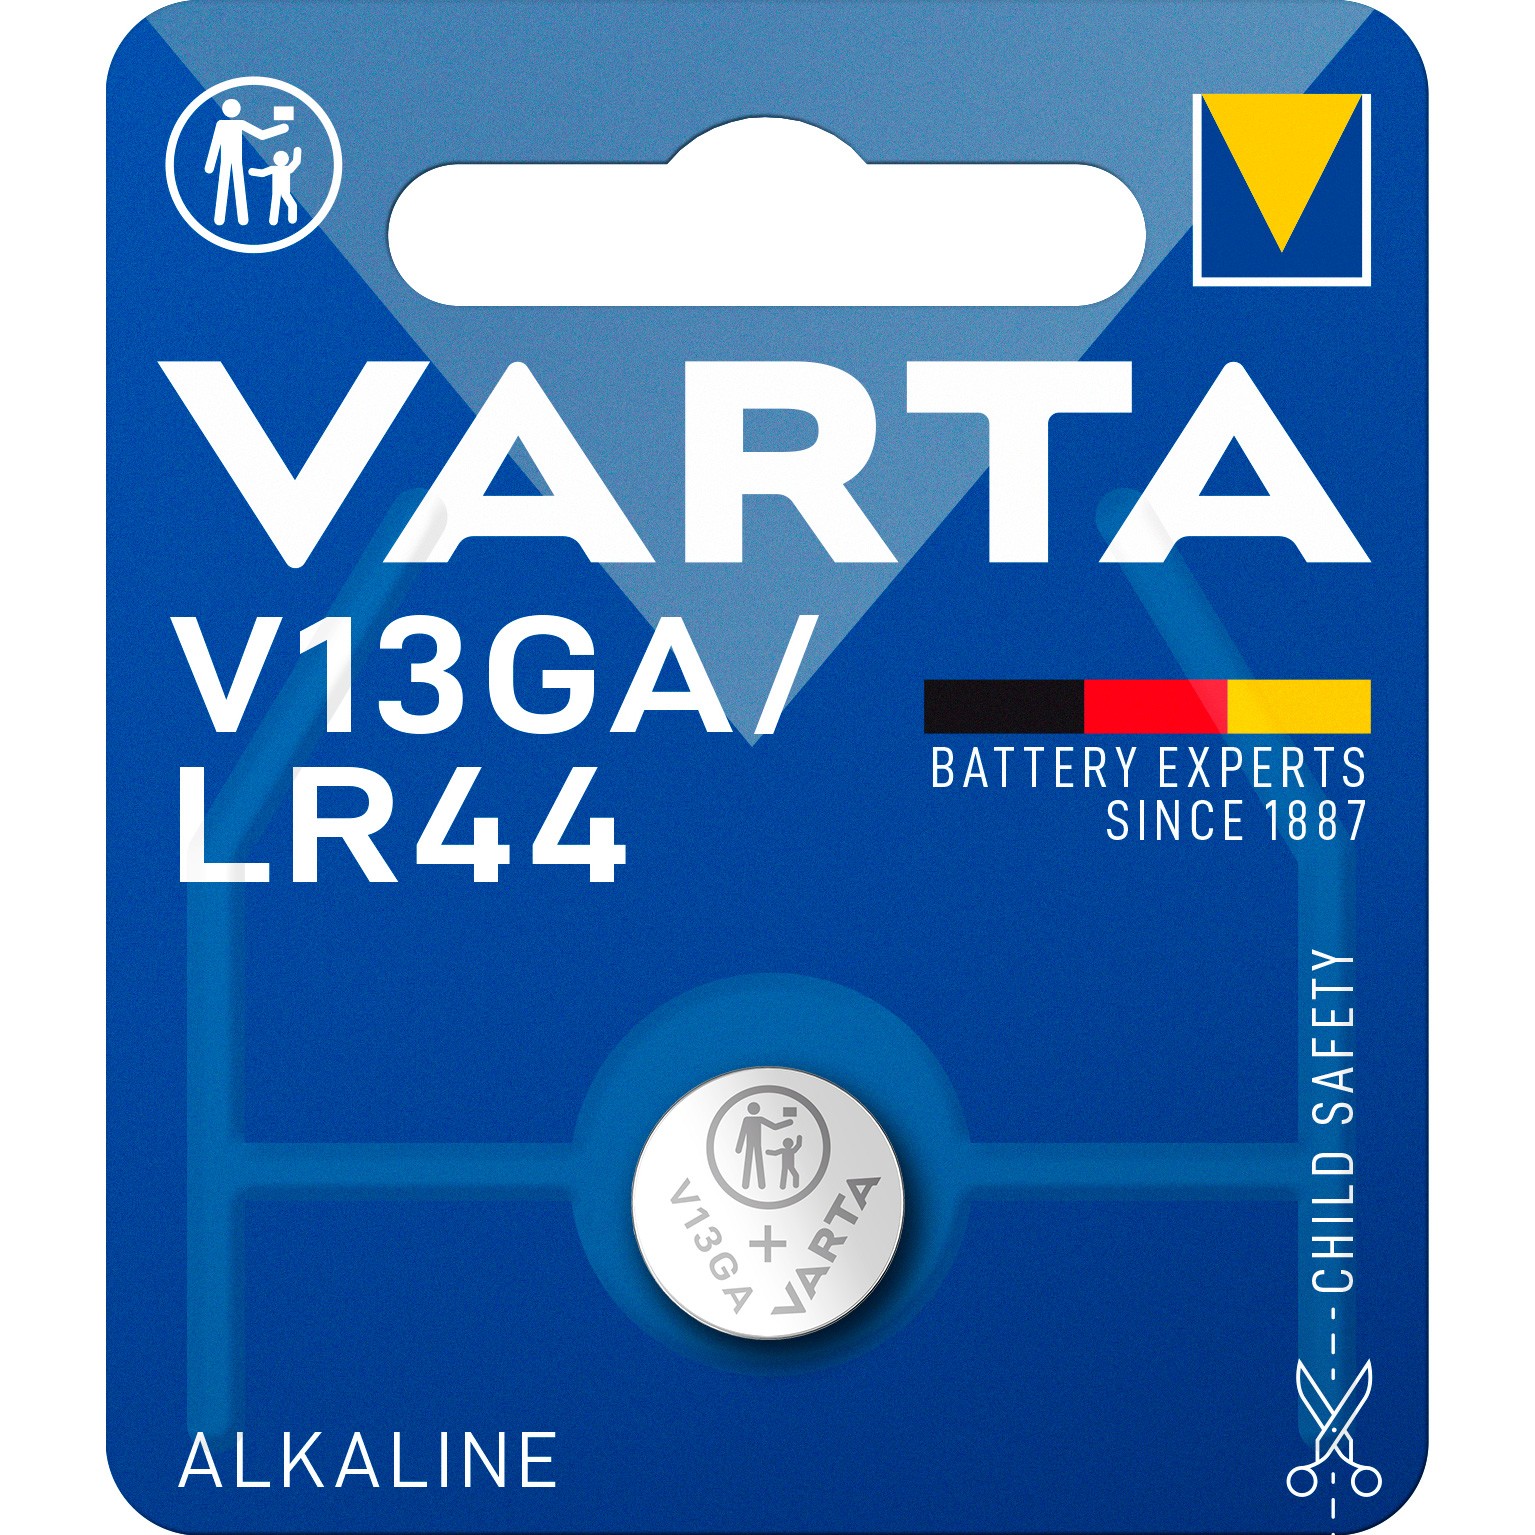 VARTA knapcellebatteri V13GA/LR44 1 stk